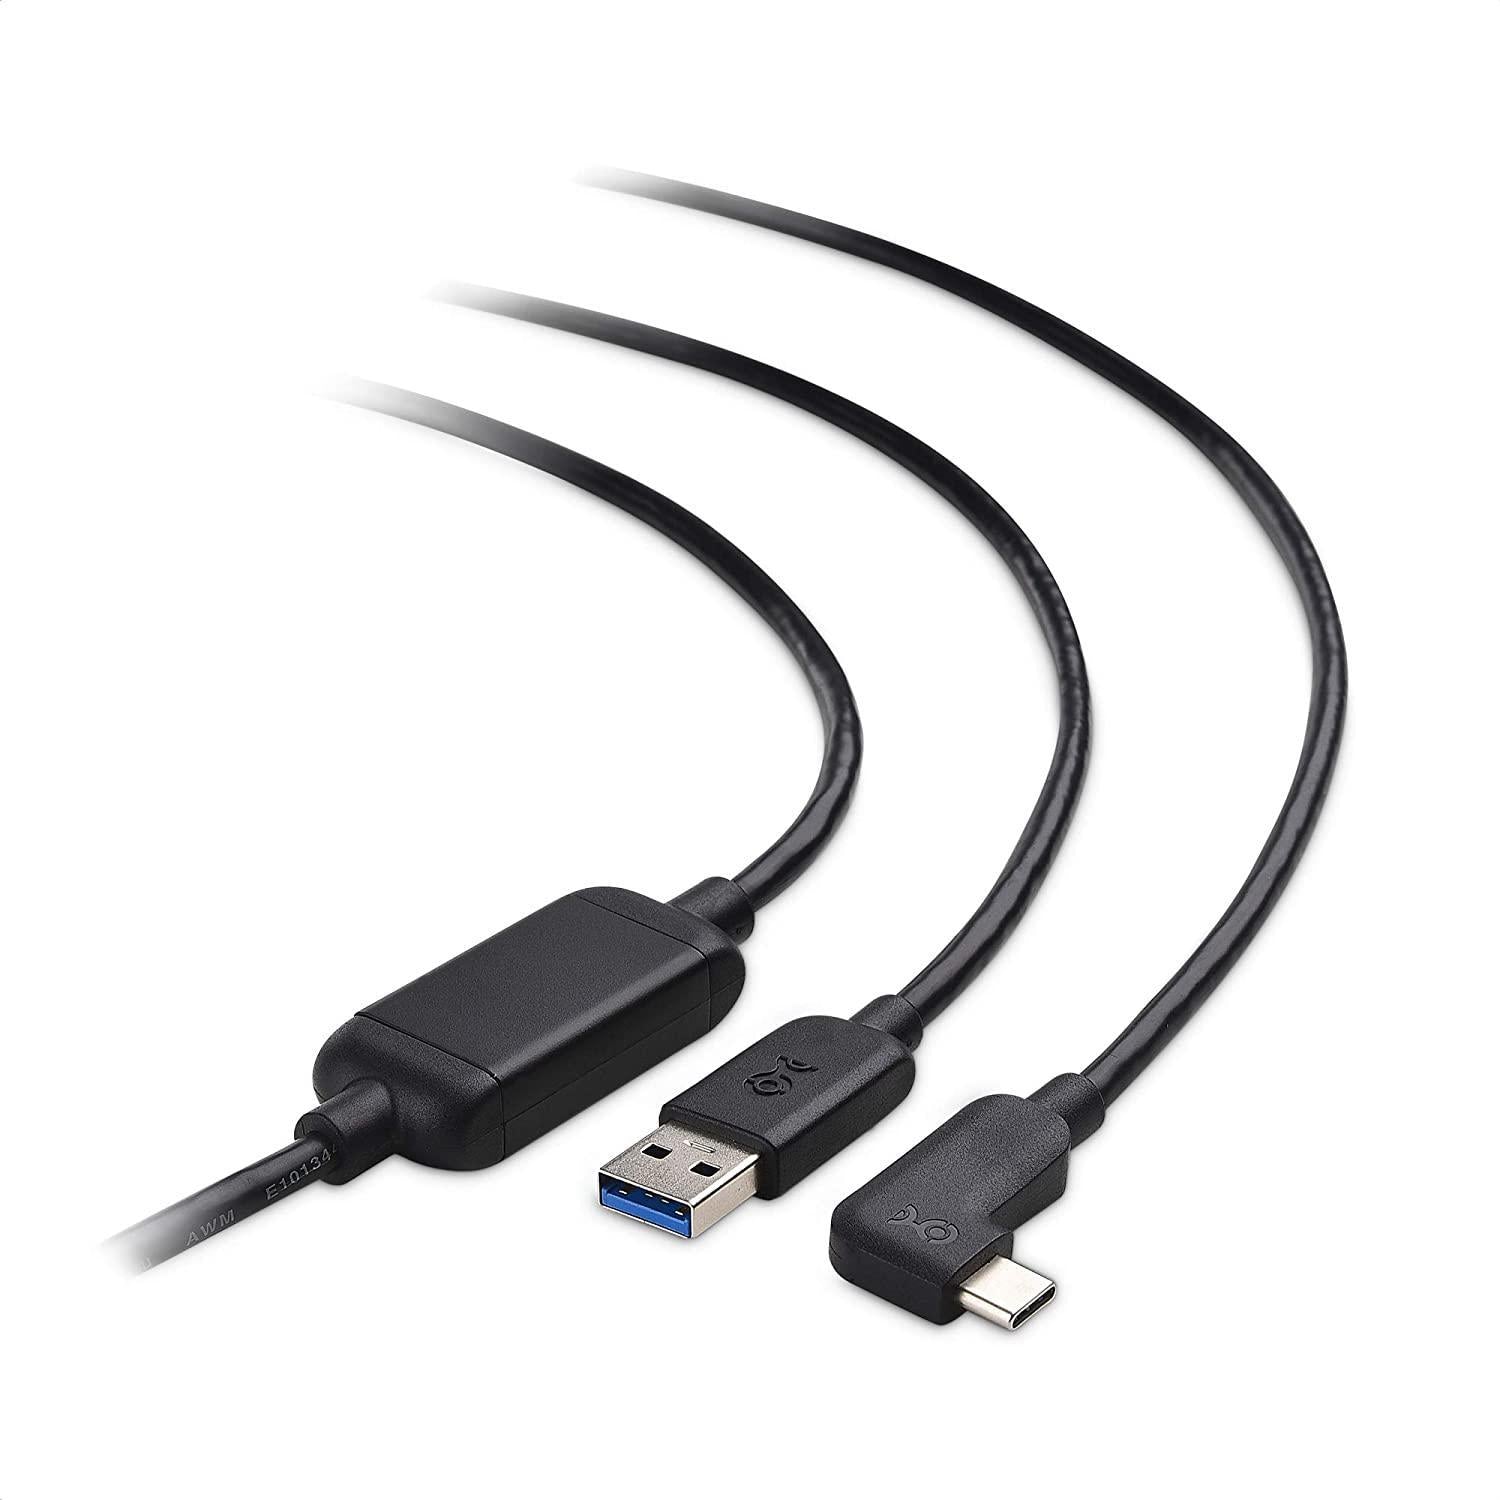 Cable Matters aktiivinen 75 m USB-C–USB-A VR Link -kaapeli Oculus Quest 2:lle USB3.2 Gen1 5 Gbps 3A Super Speed VR Link -kaapeli